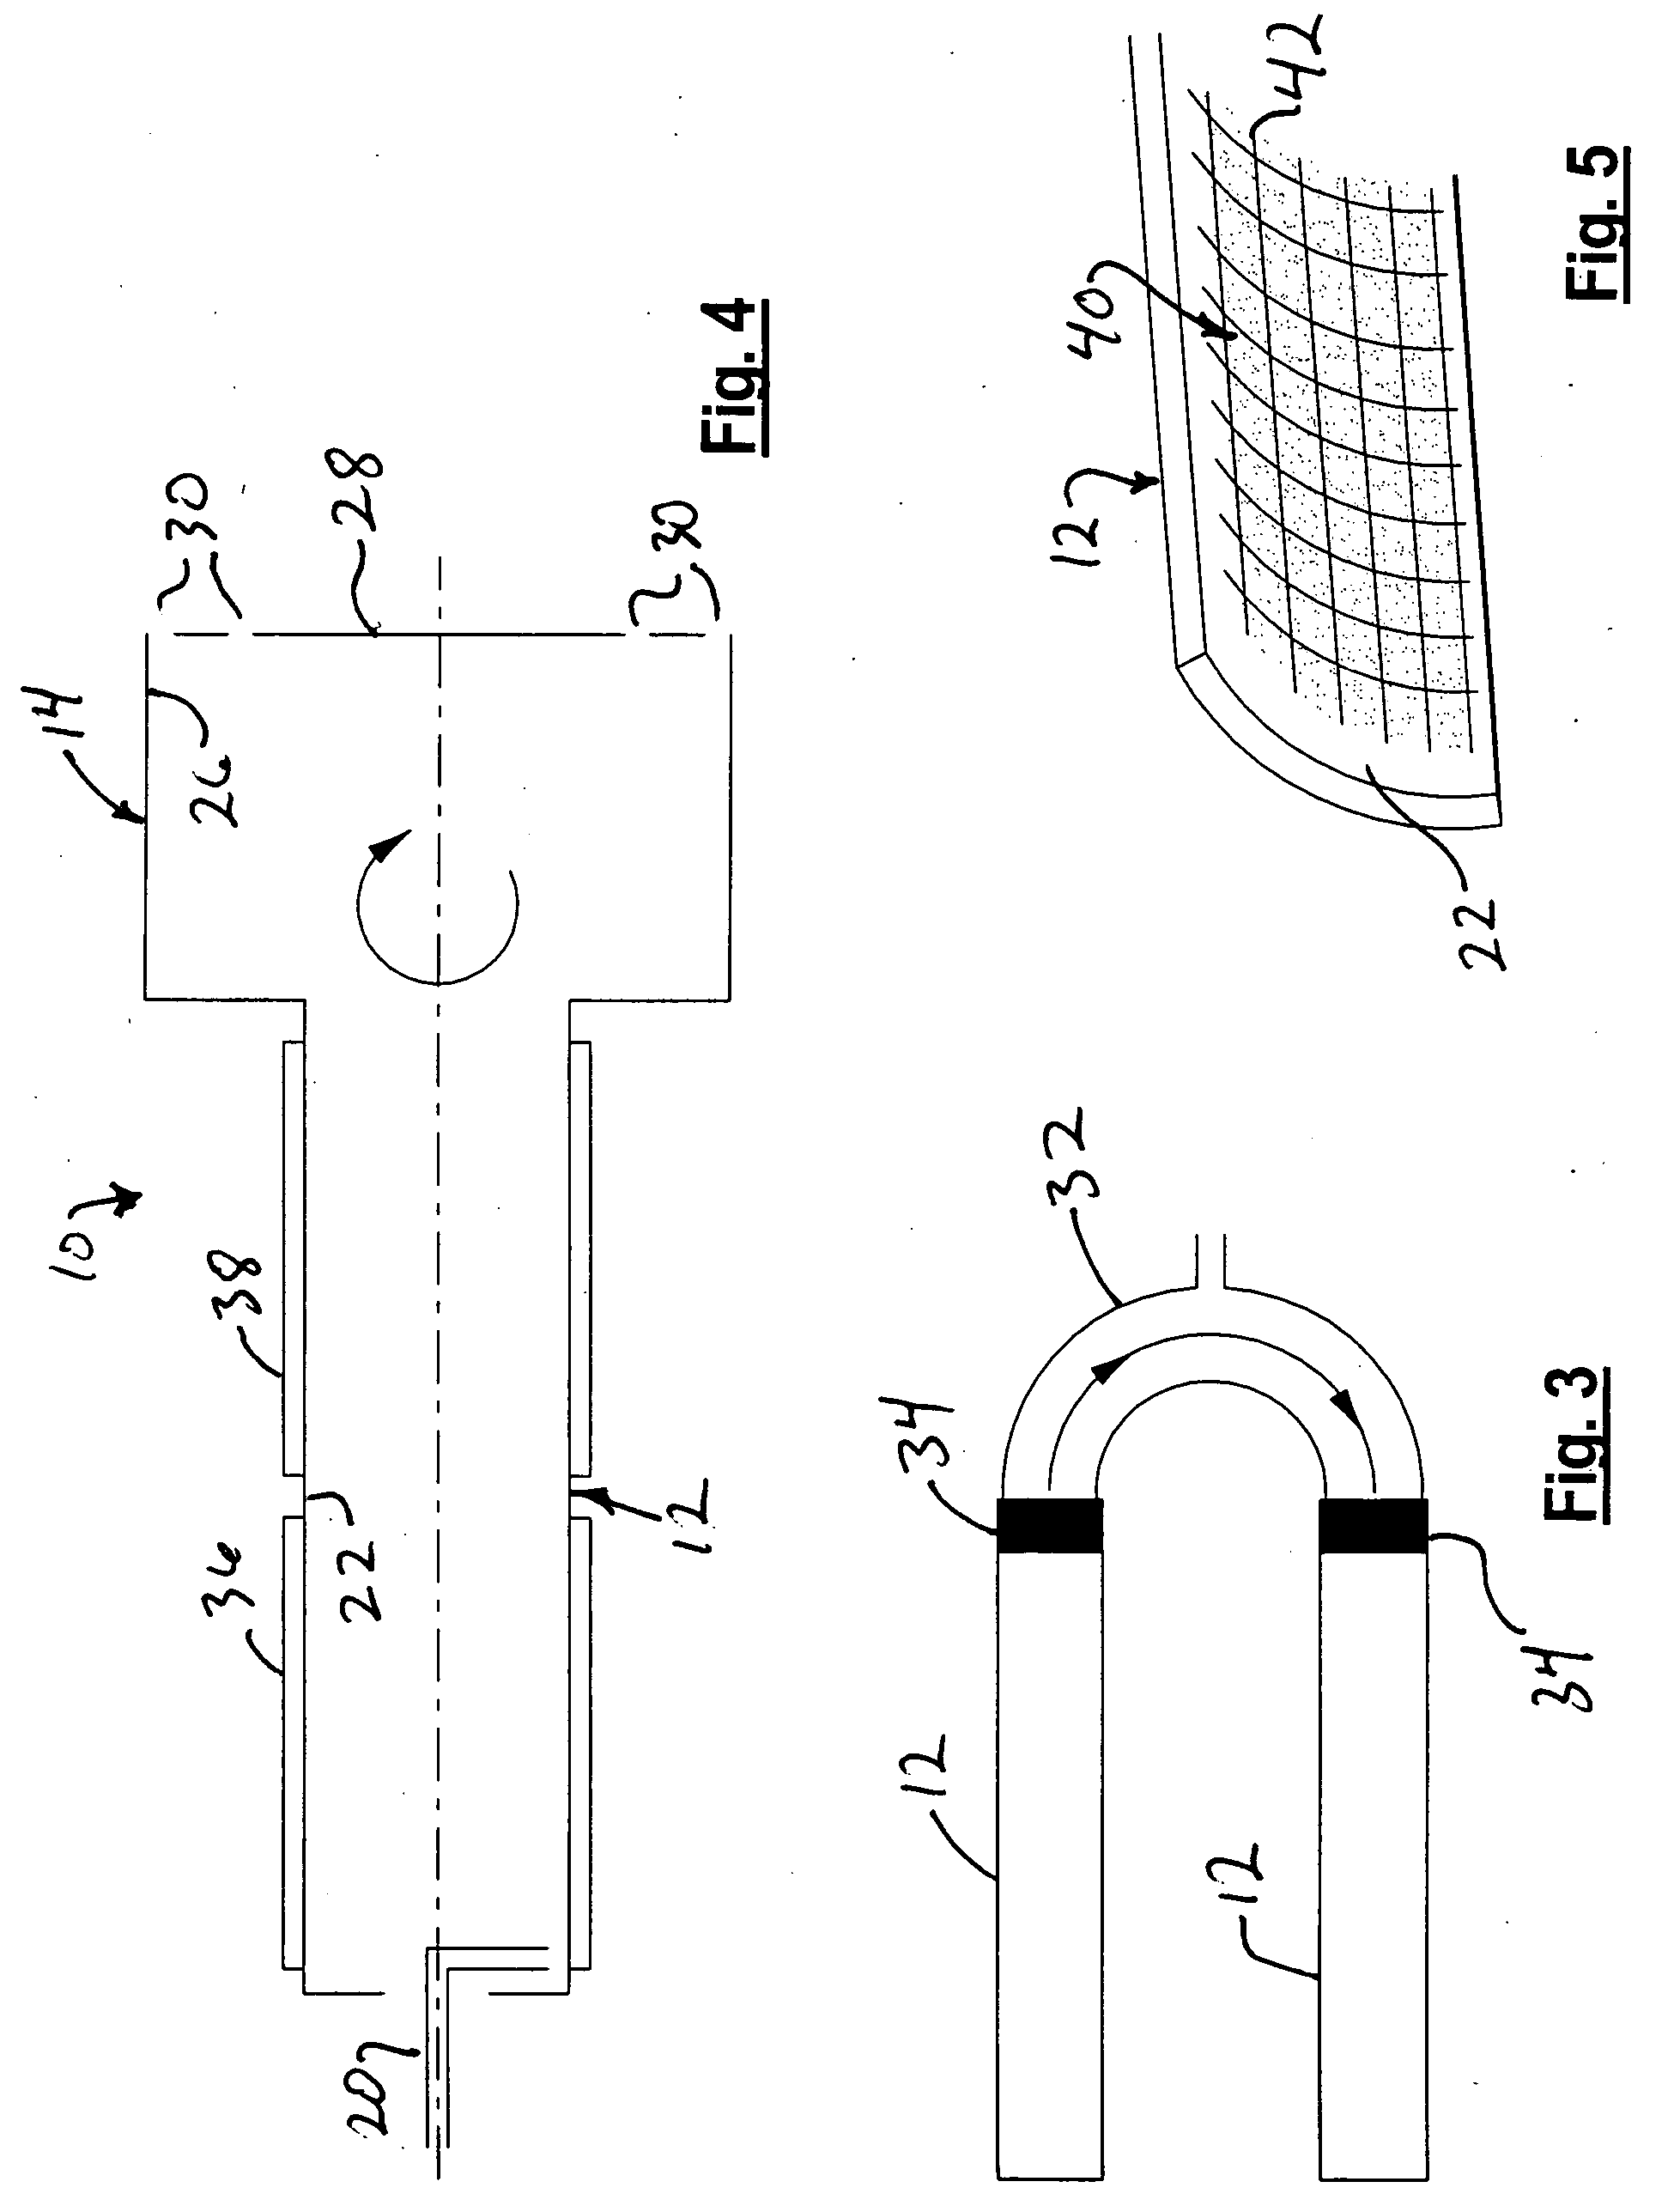 Thin film tube reactor